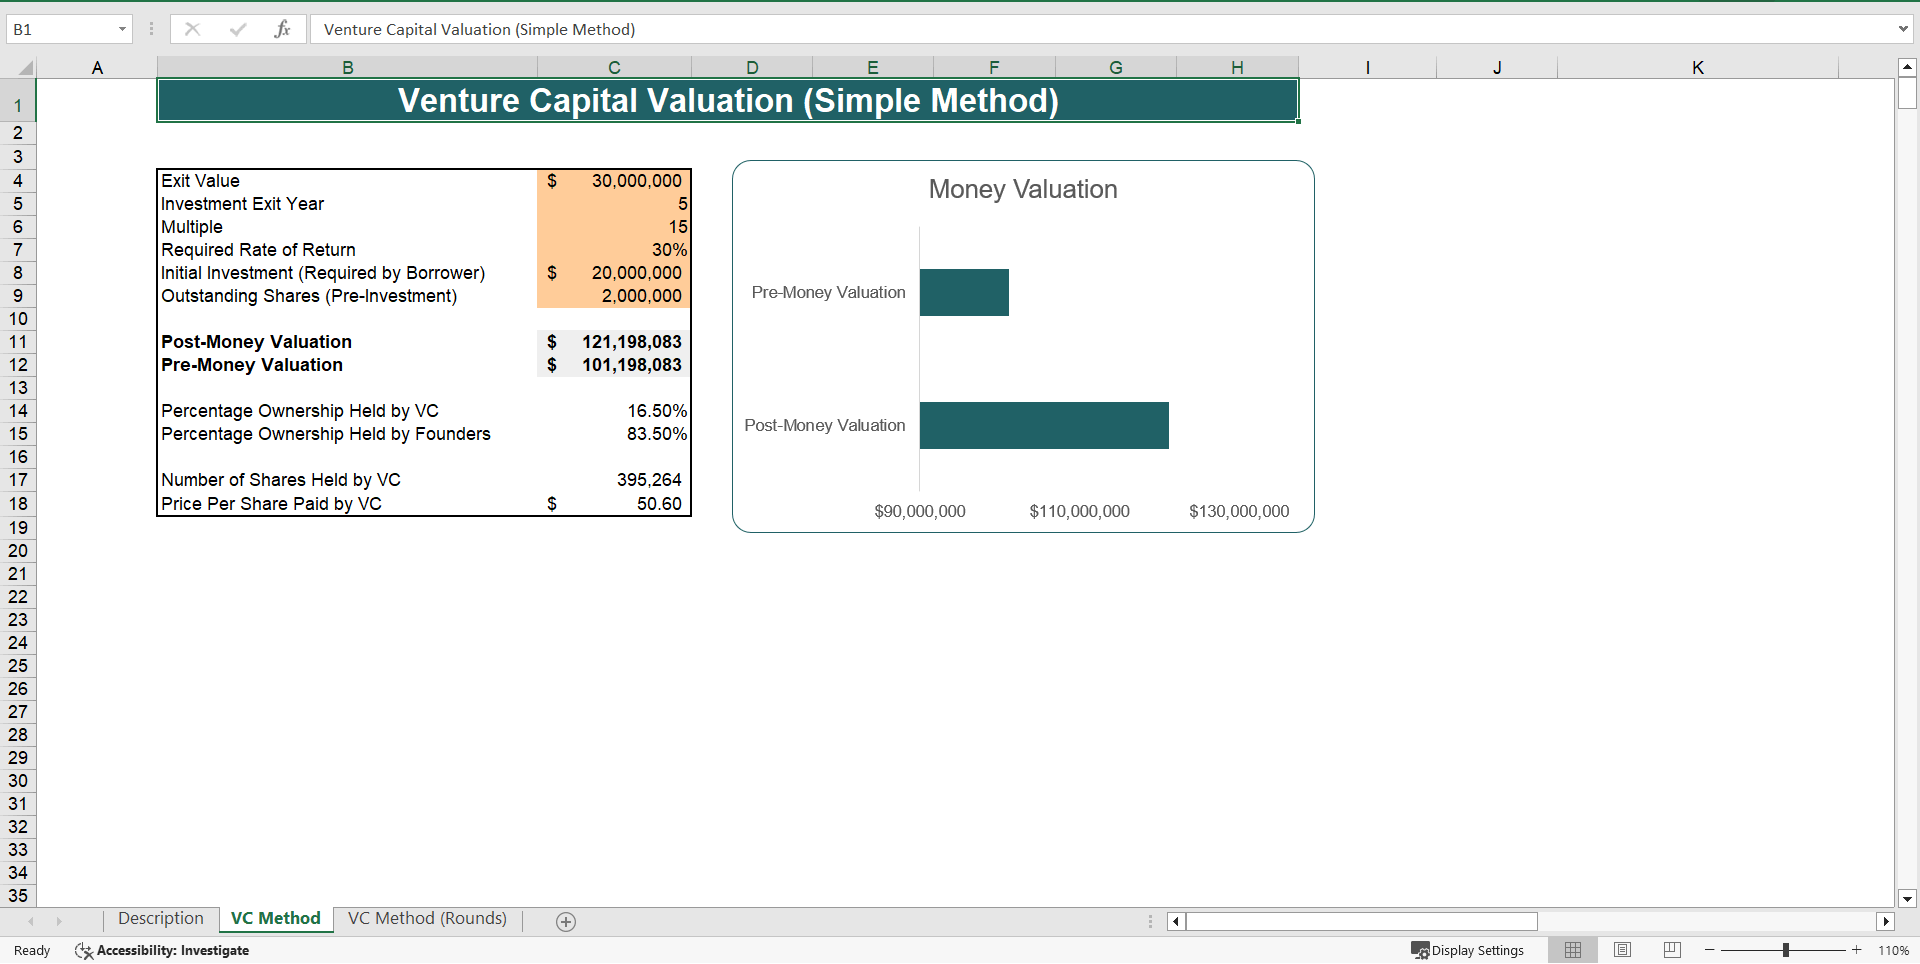 Venture Capital Valuation Method